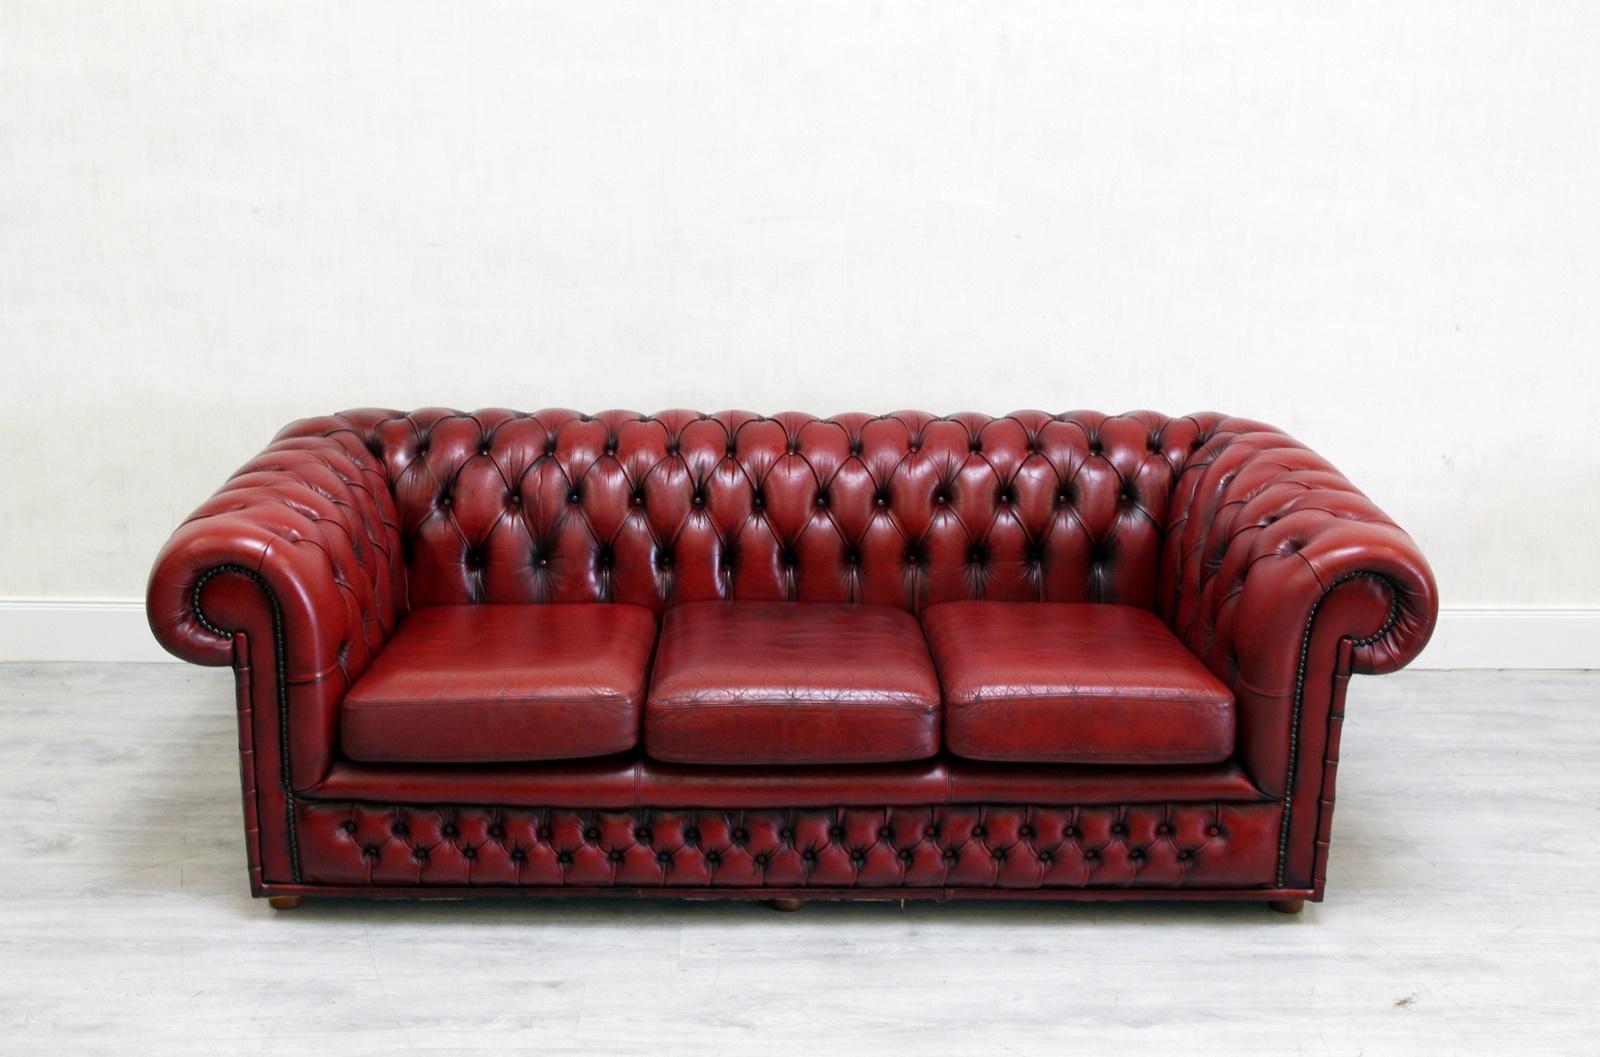 Chesterfield Sofa Garnitur Ledergarnitu Couch Antik 2-Seat 3-Seat, English In Good Condition For Sale In Lage, DE